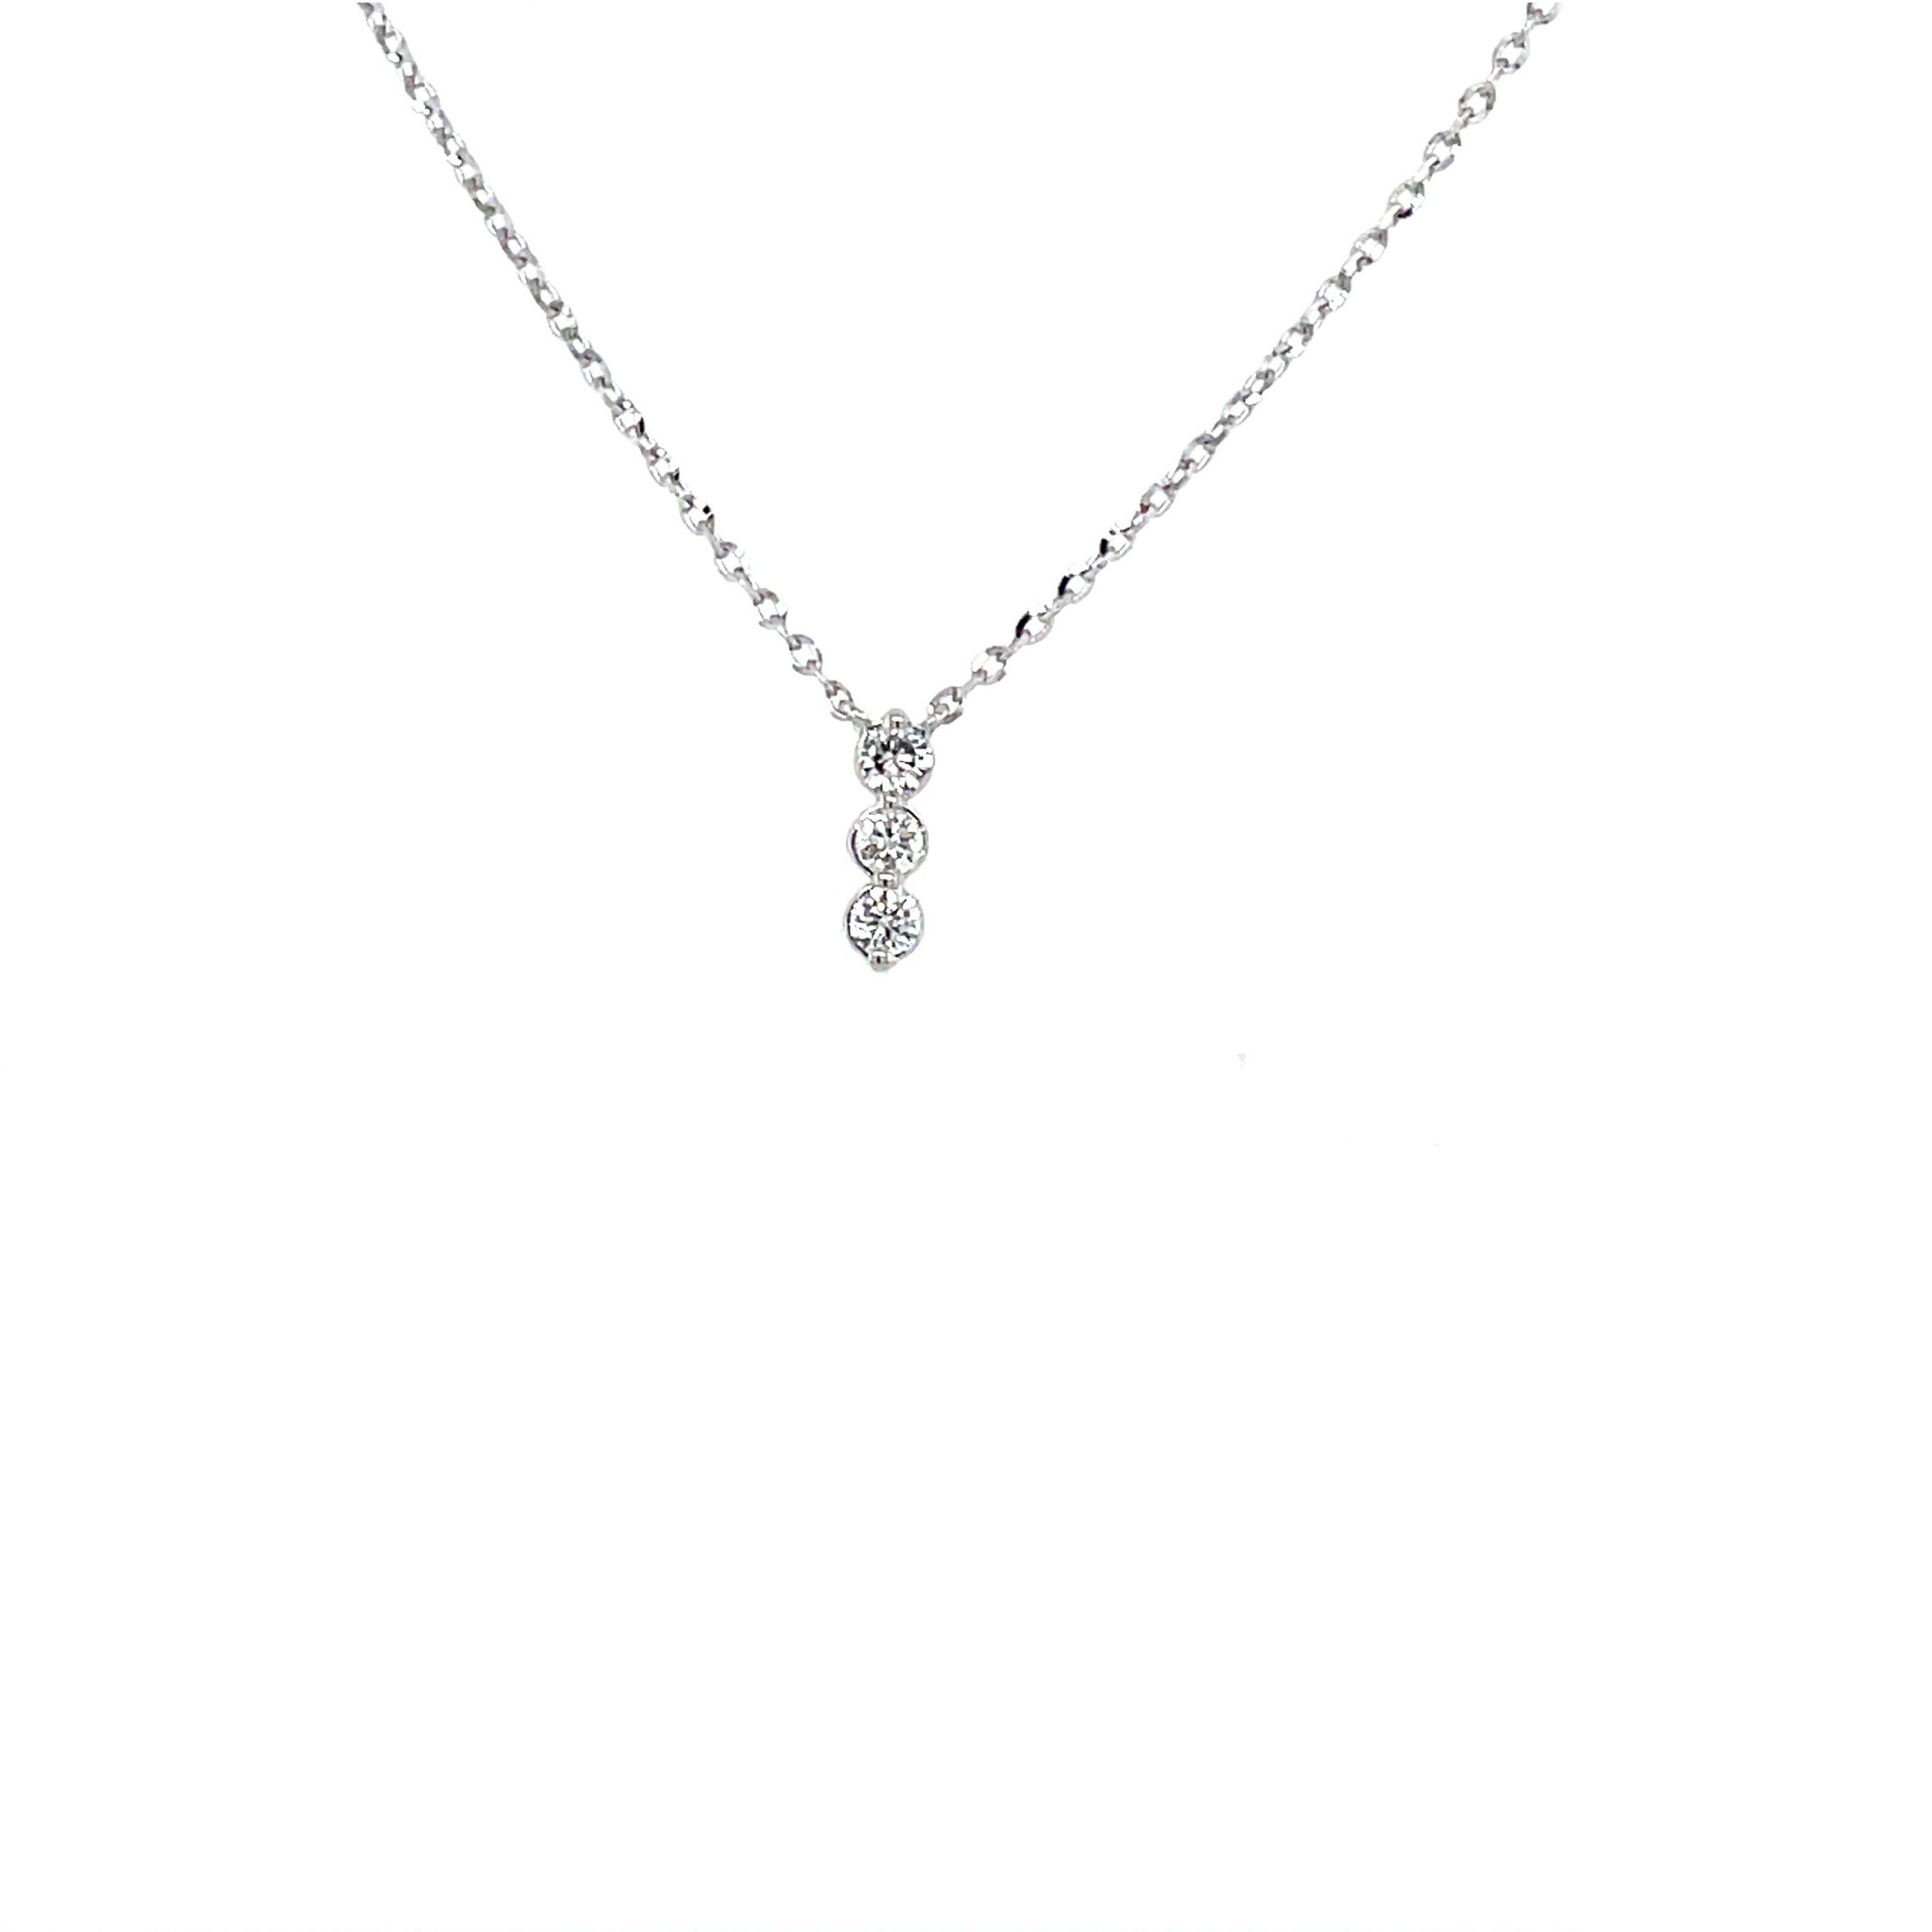 White Gold 3-Stone Diamond Pendant Necklace